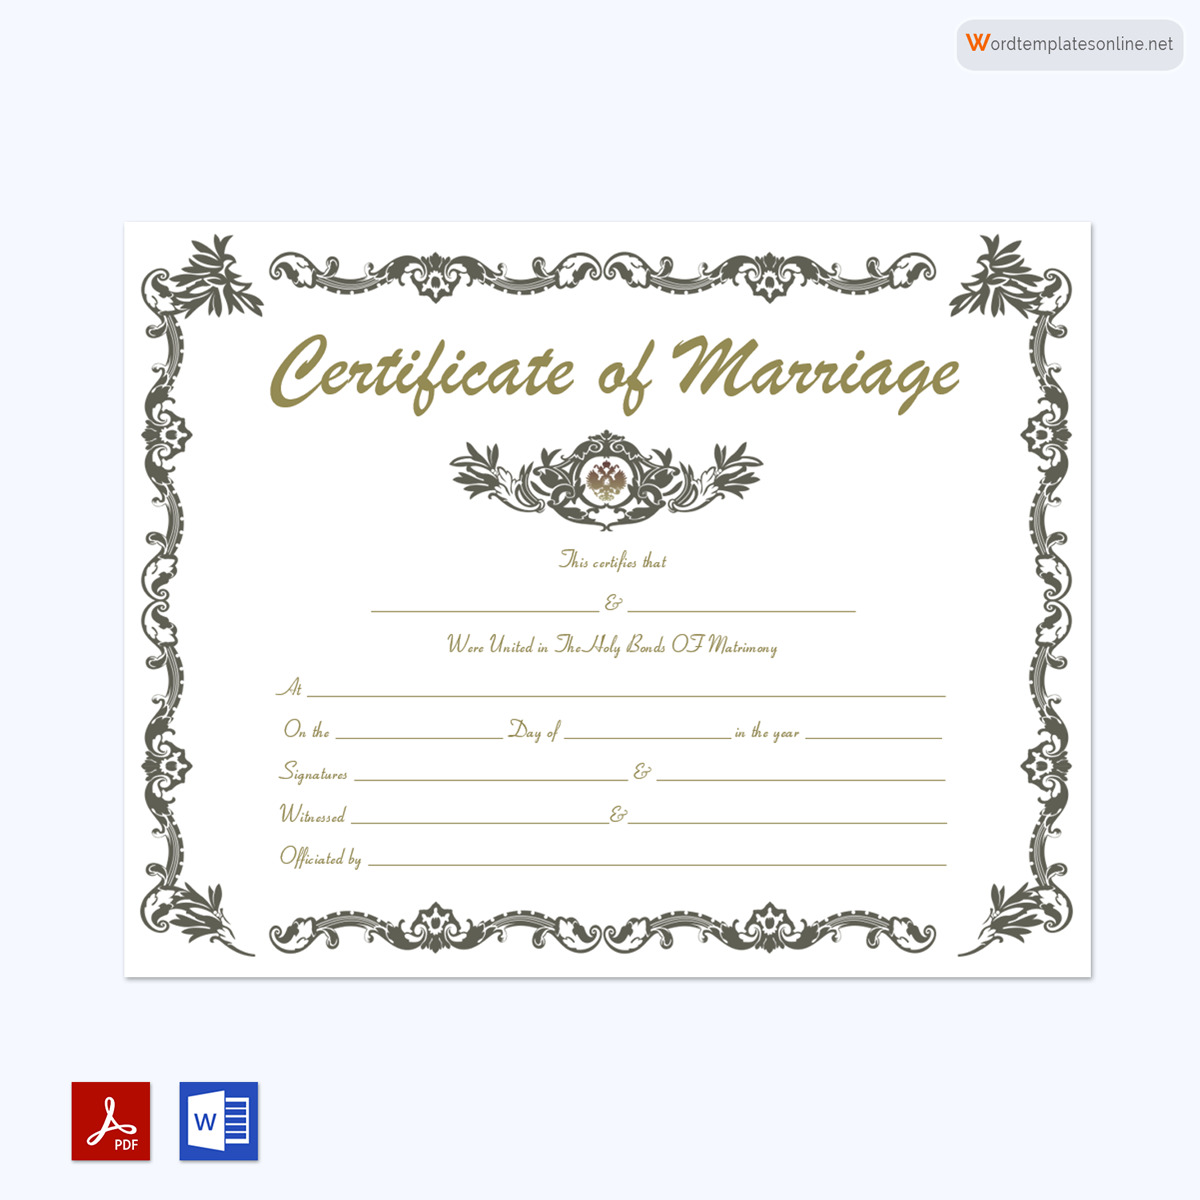 Official Wedding Certificate Template